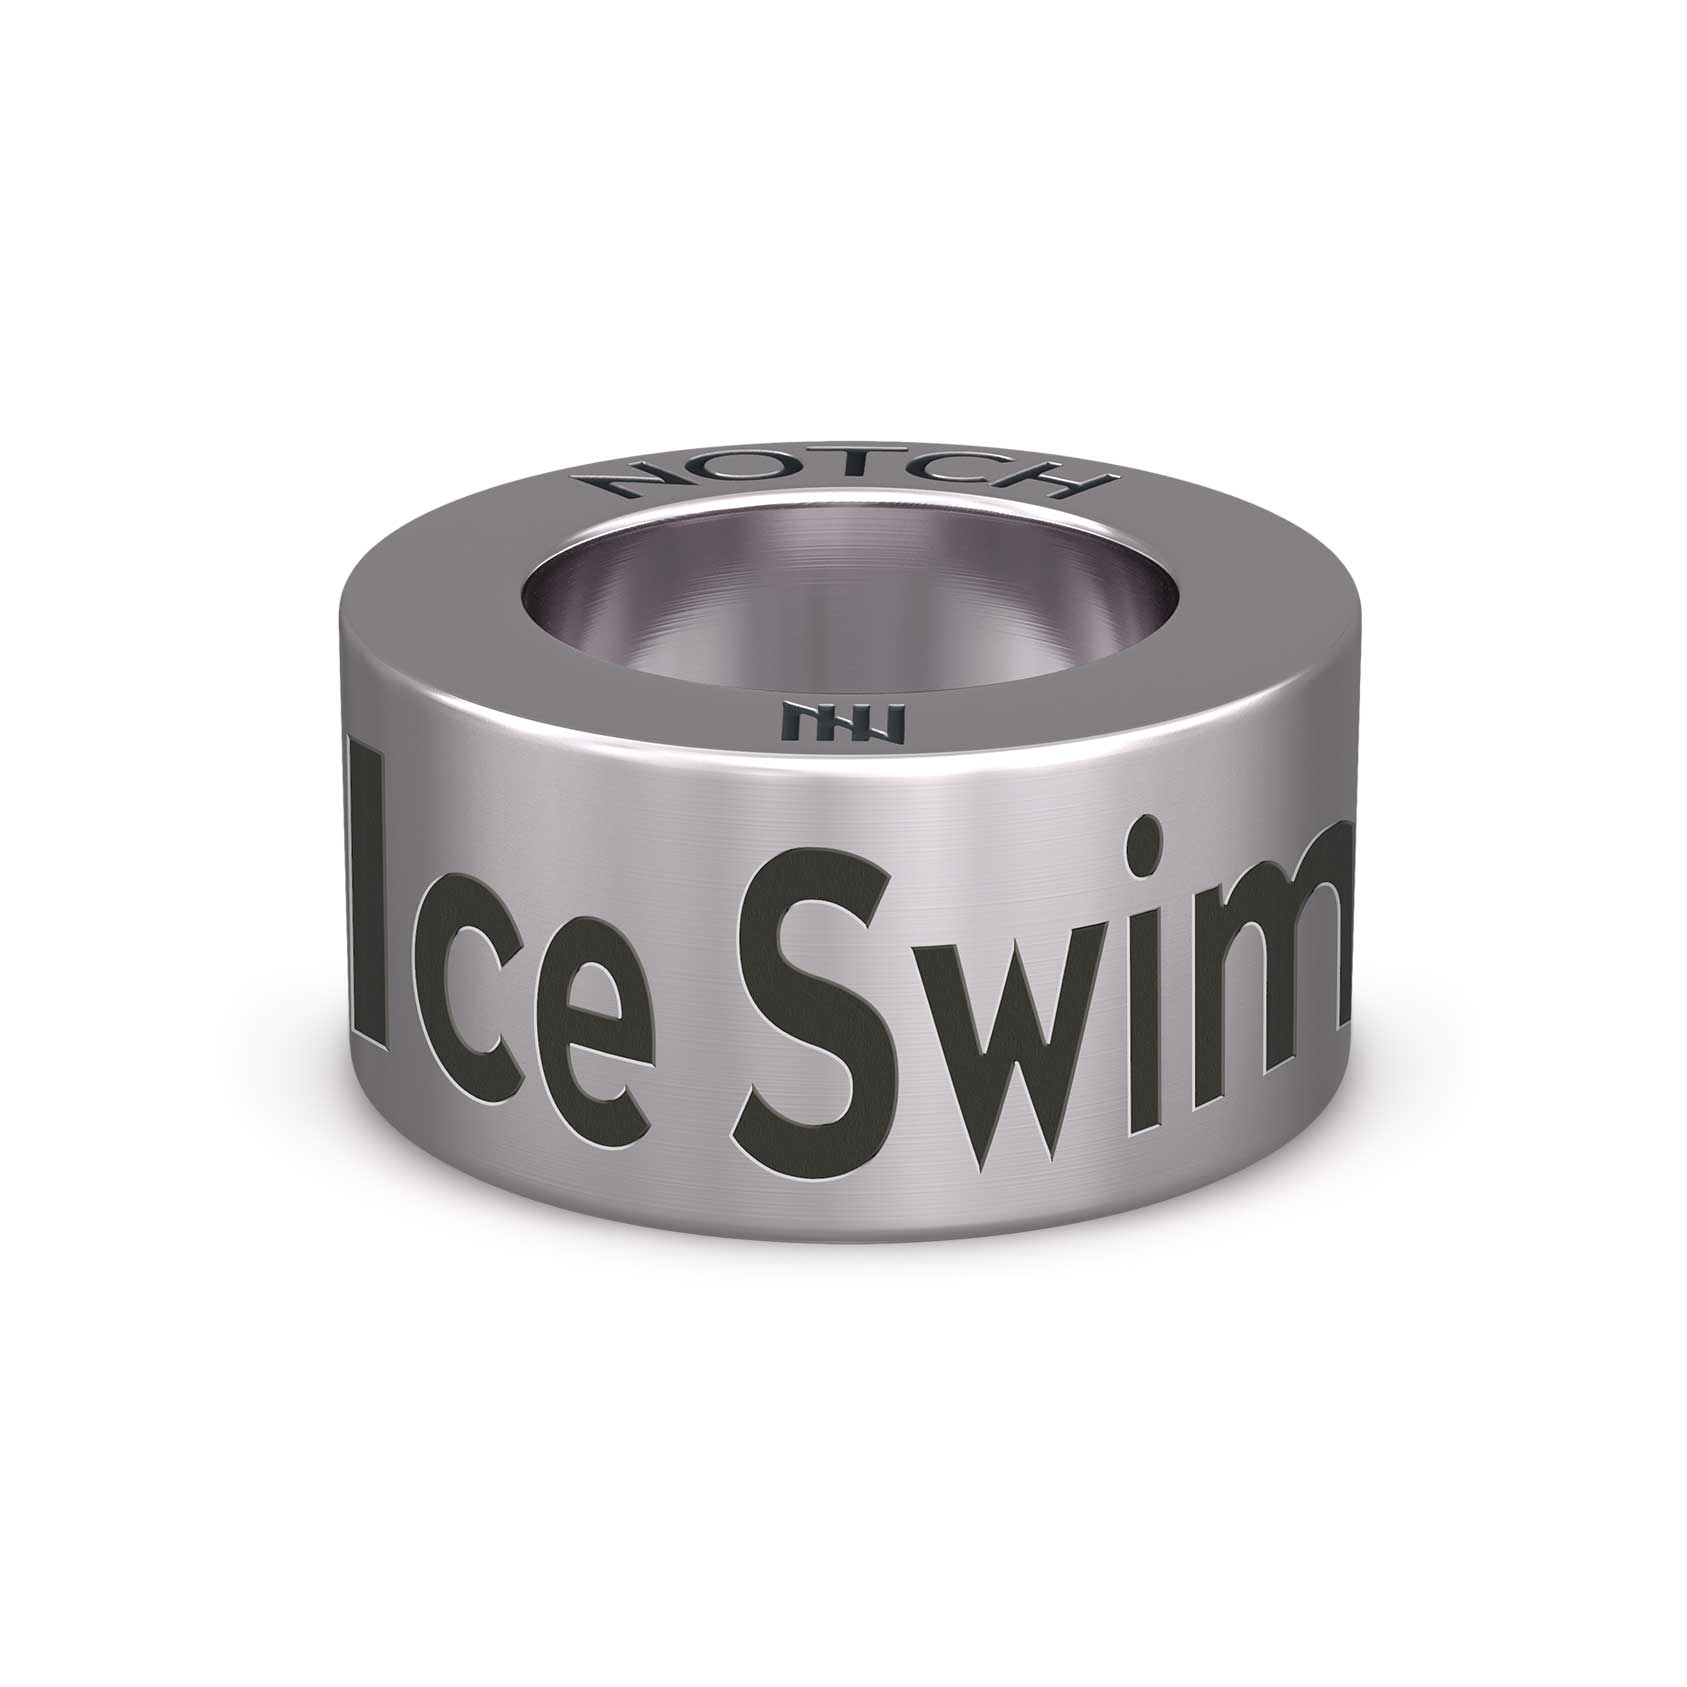 Ice Swimmer NOTCH Charm